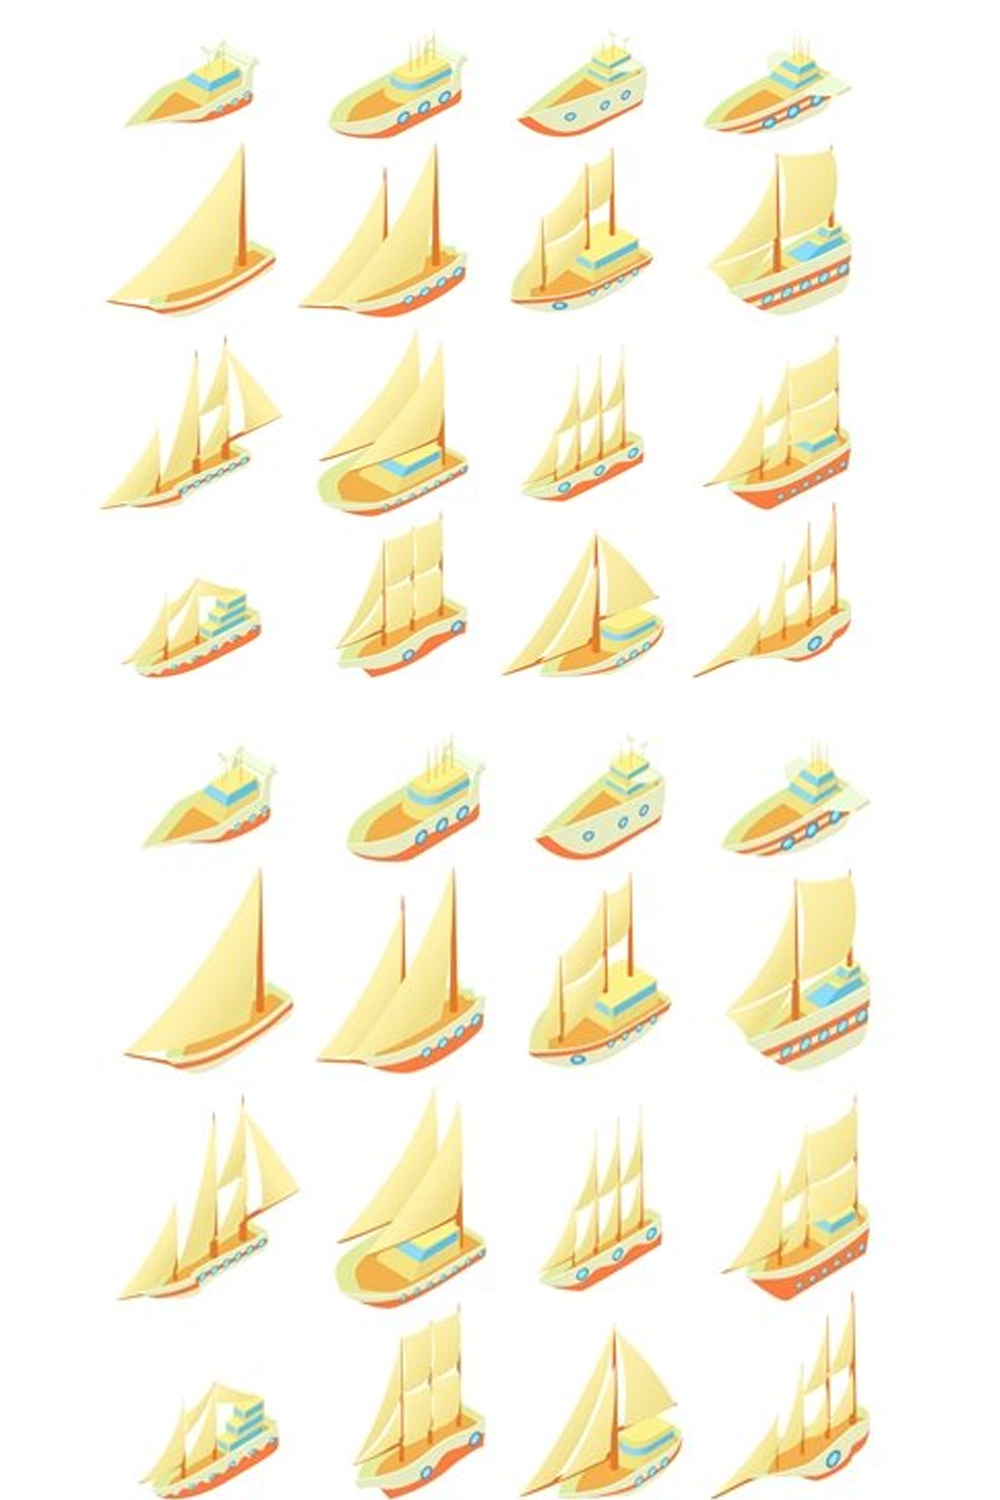 Illustrations sailing ship icons set of pinterest.